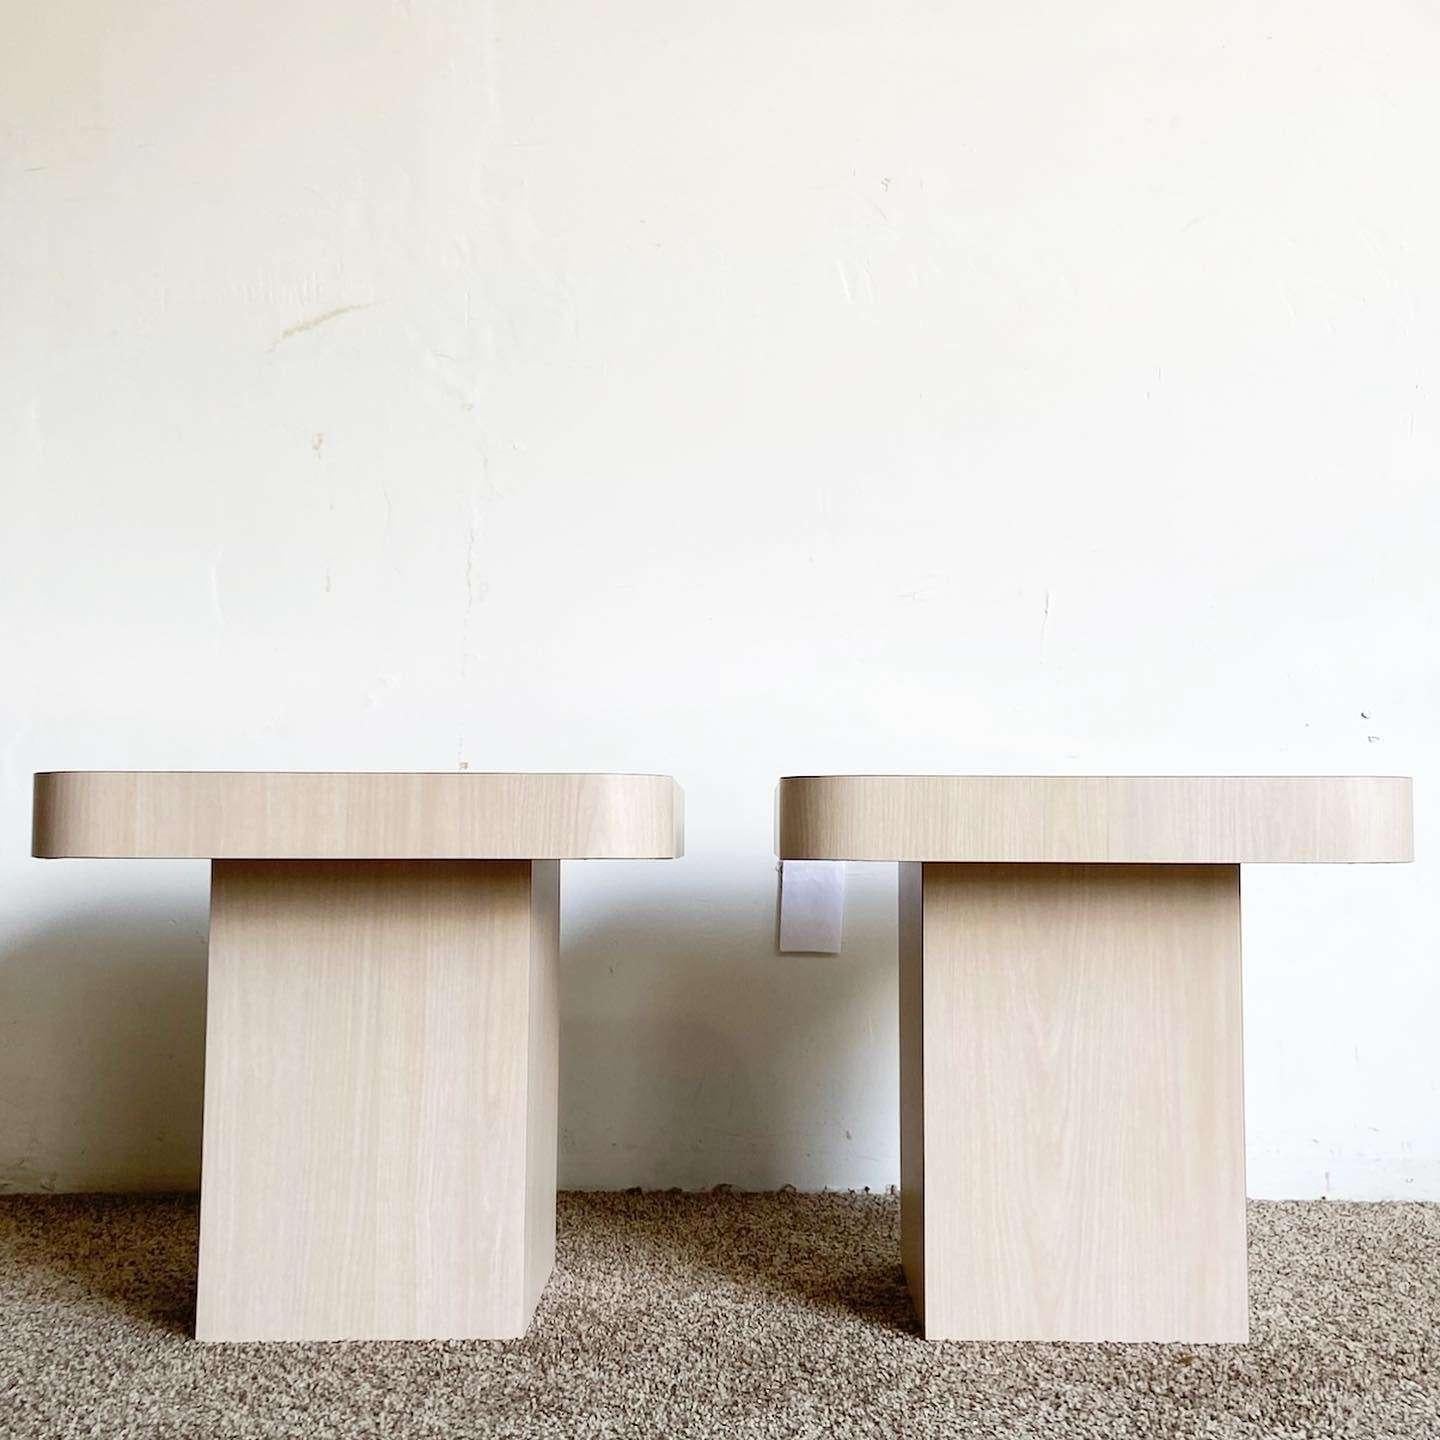 Late 20th Century Postmodern Wood Grain Laminate Mushroom Side Tables - a Pair For Sale